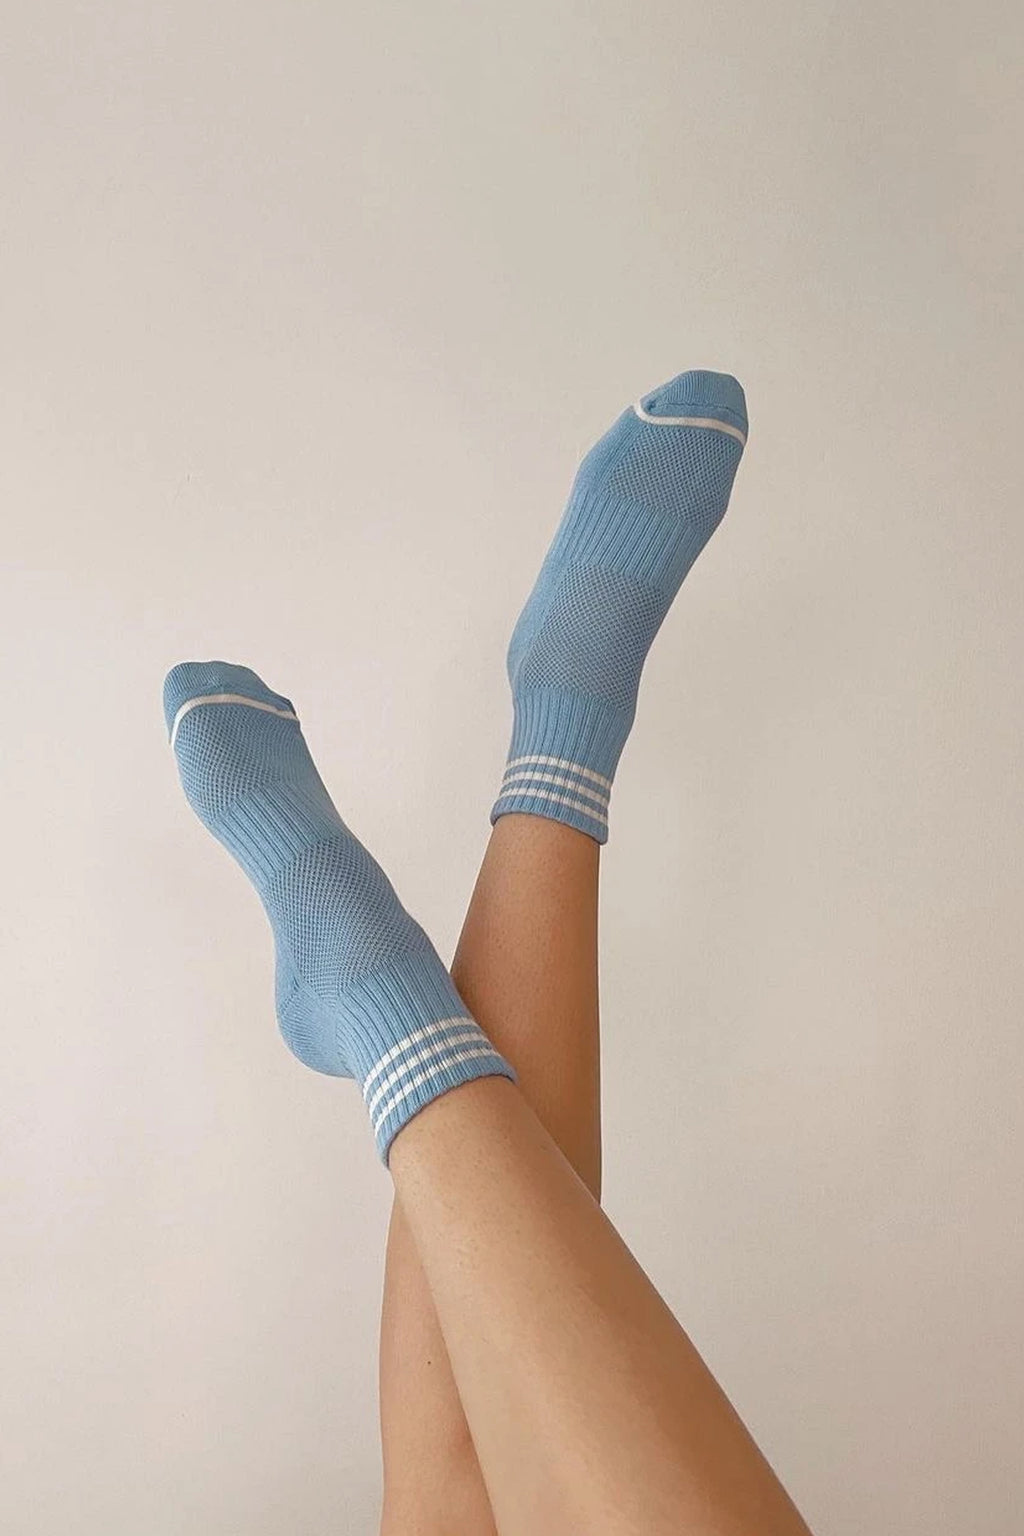 Le Bon Shoppe Girlfriend Parisian Blue Socks - The Mercantile London